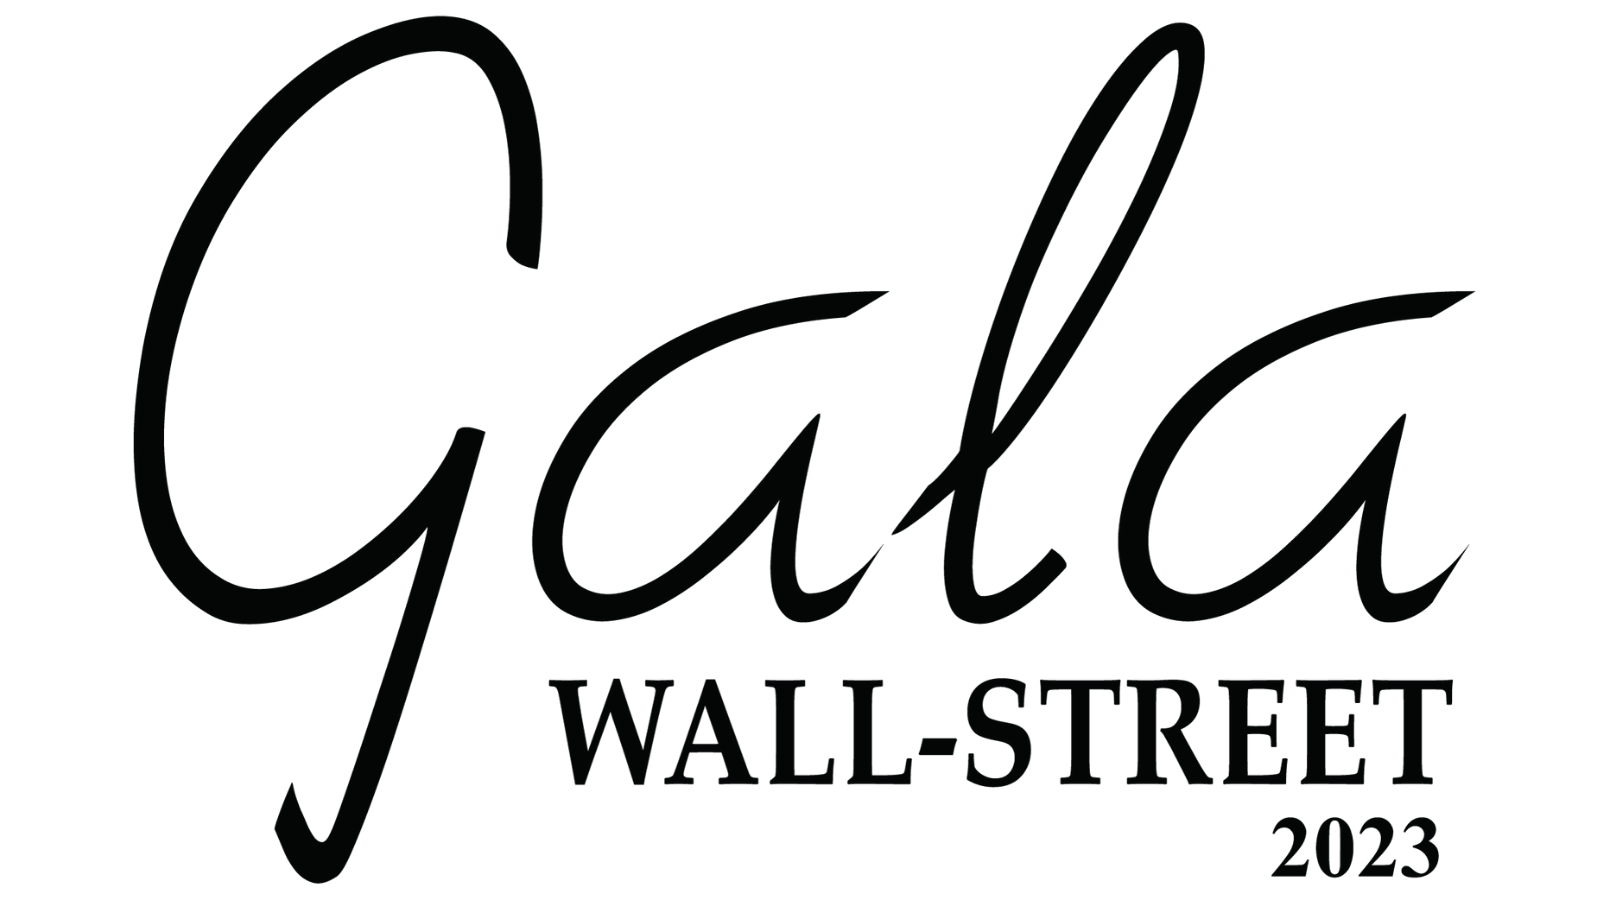 Gala Wall-Street 2023